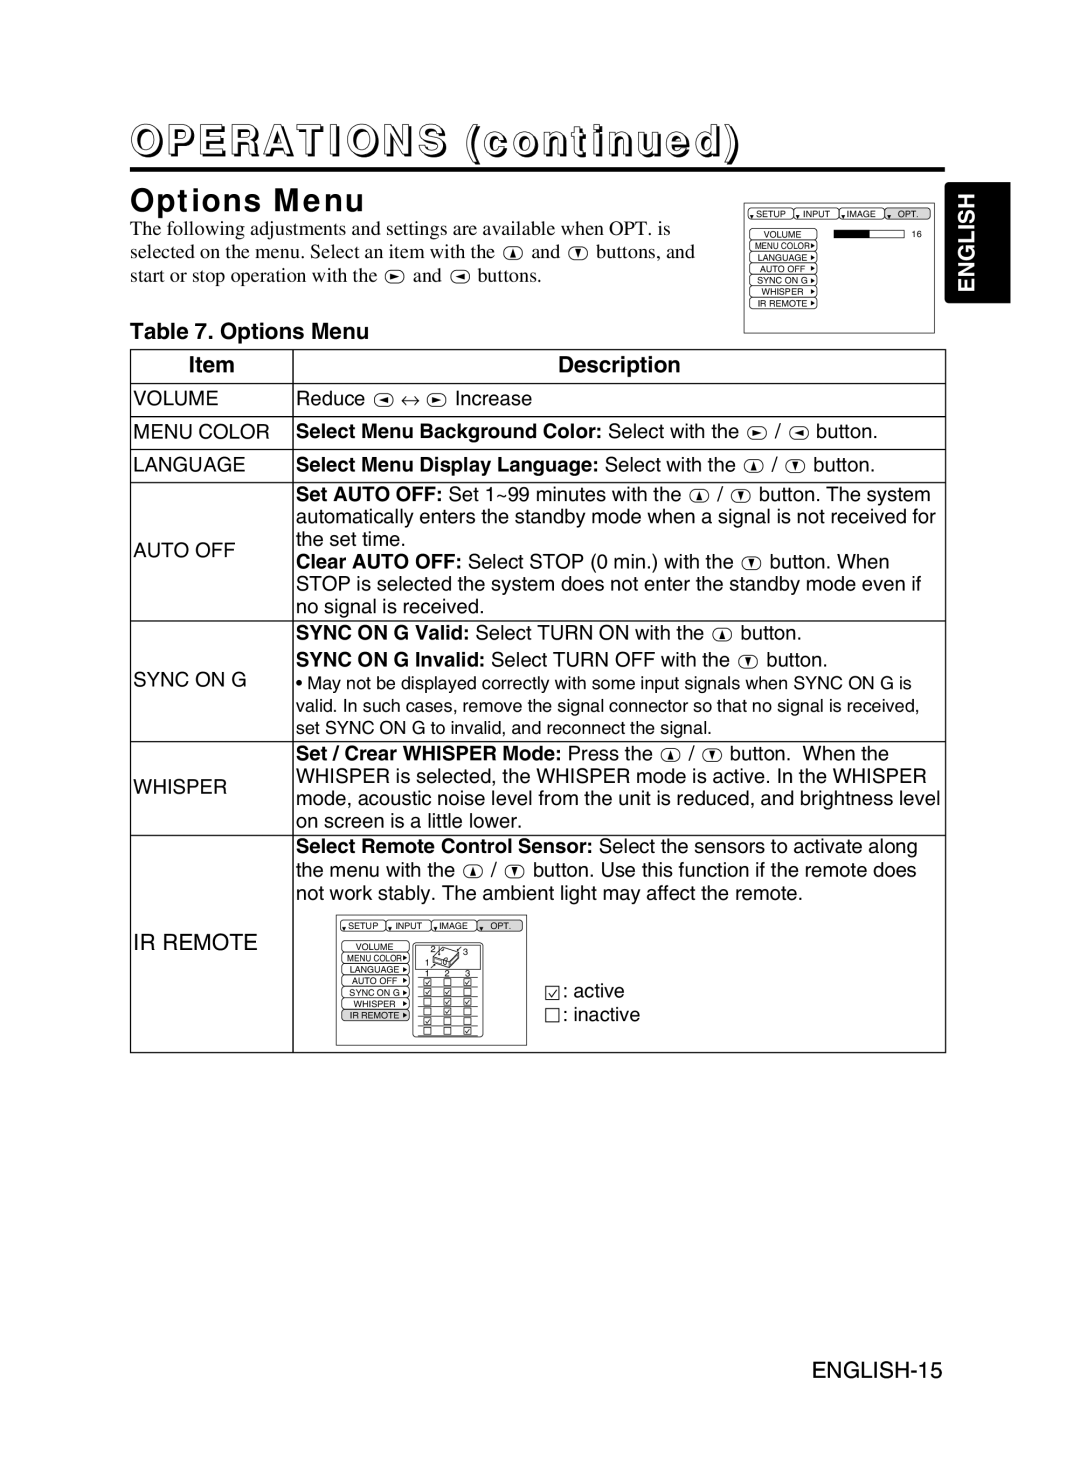 BOXLIGHT CP-775I user manual Options Menu, Ir Remote, ENGLISH-15, OPERATIONS continued, English, Description 